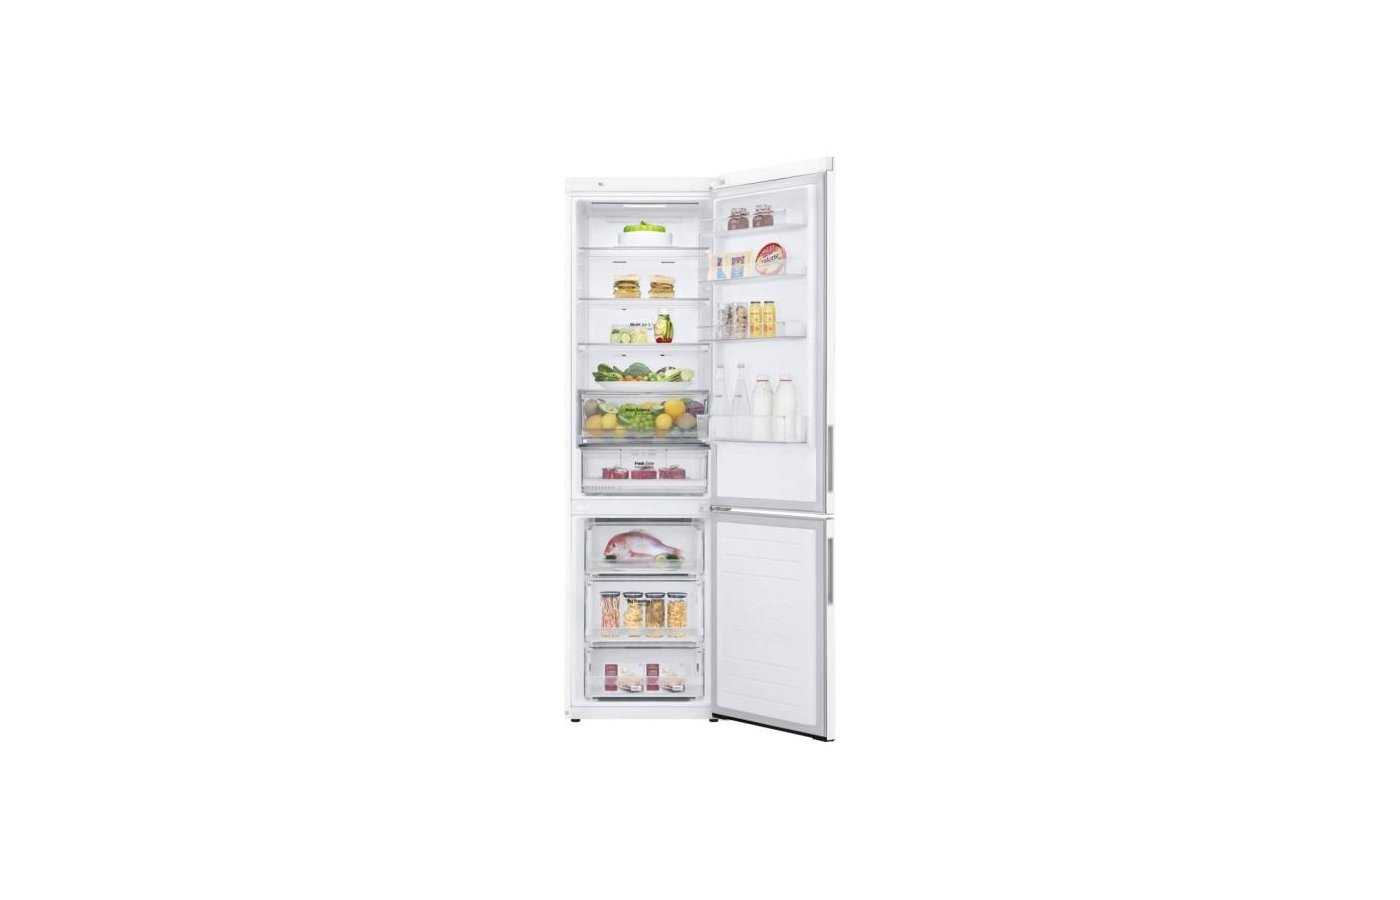 Обзор холодильника lg ga-b419slgl, ga-b419sygl, ga-b419sqgl